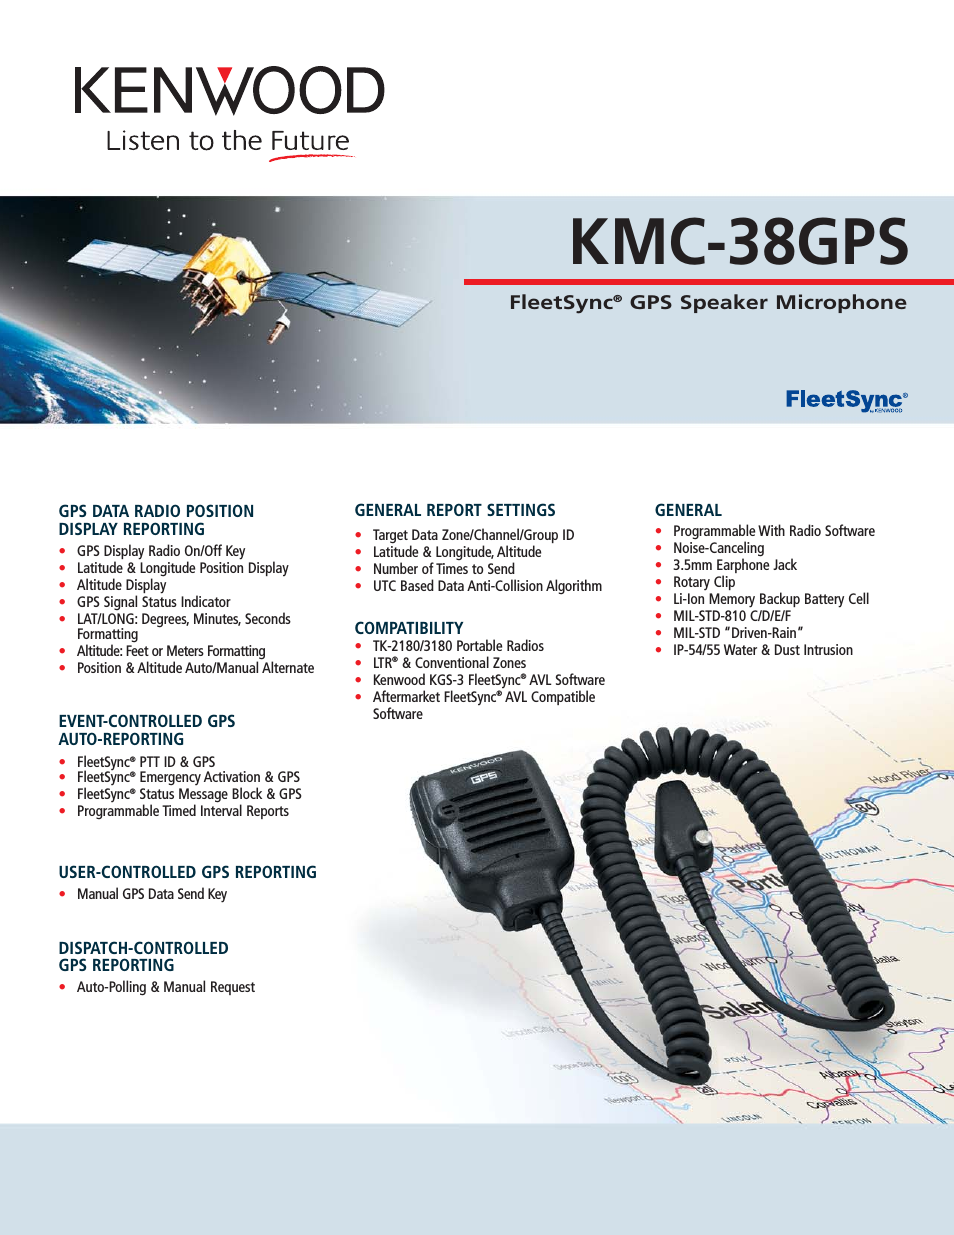 FleetSync KMC-38GPS